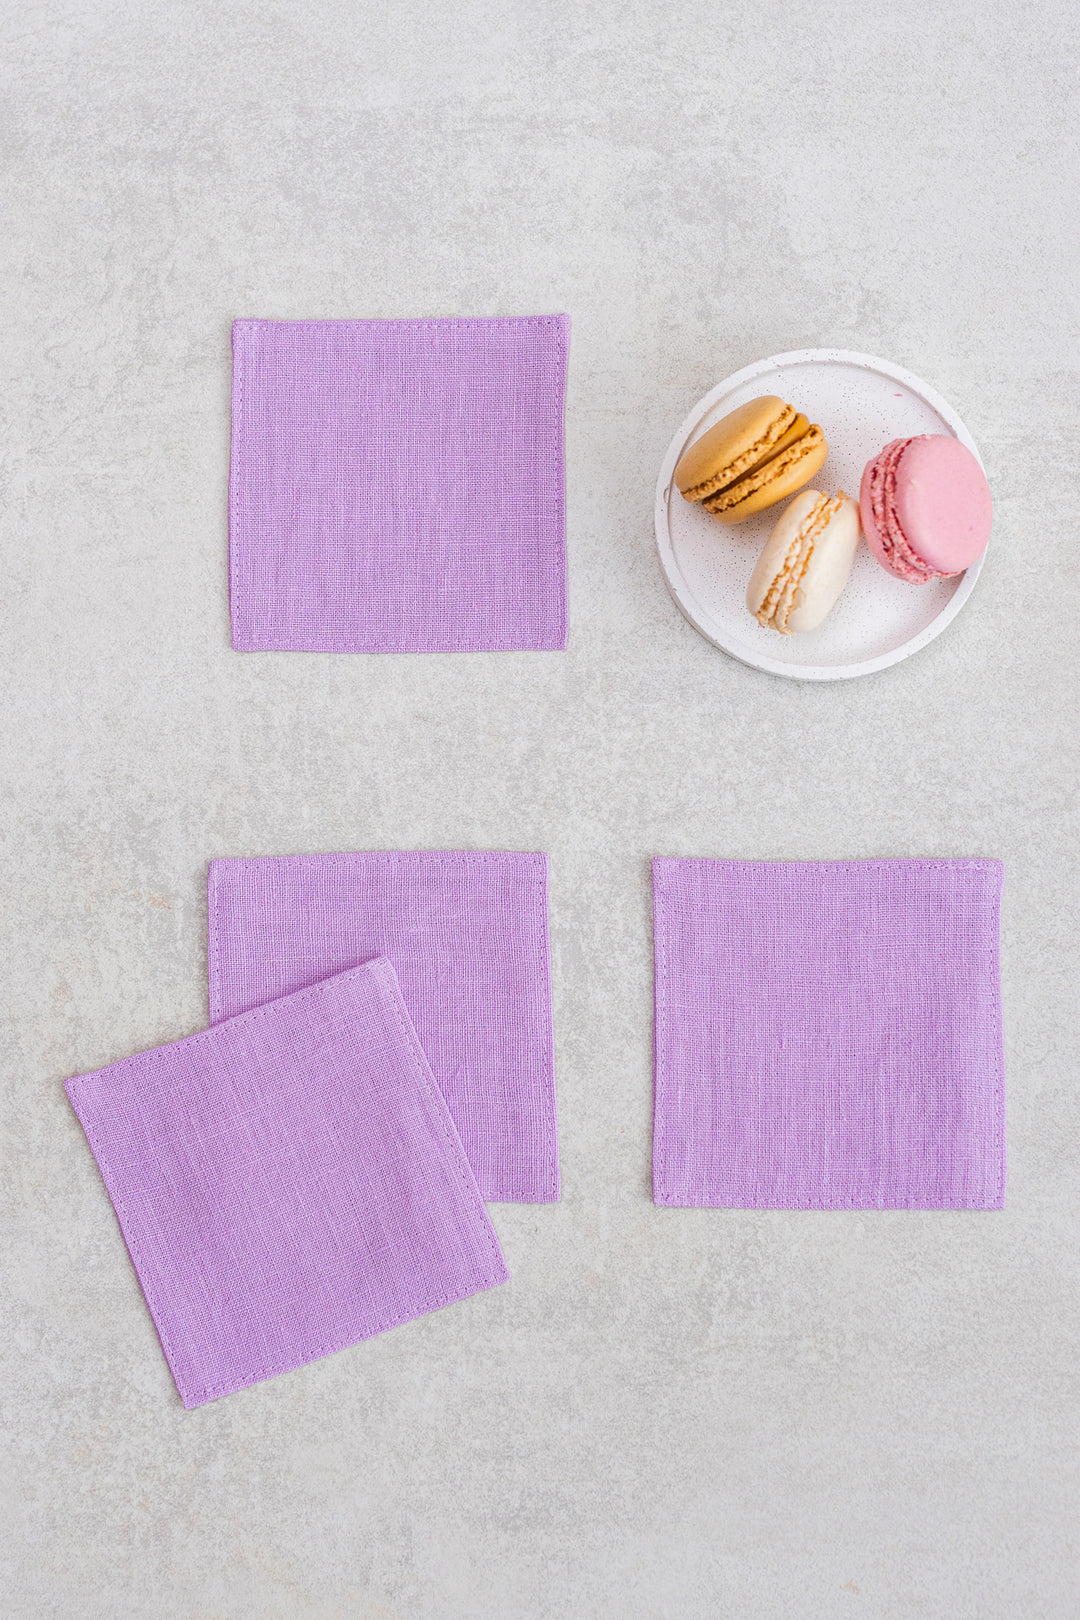 Lavender Linen Coasters Set Of 4 - Daily Linen